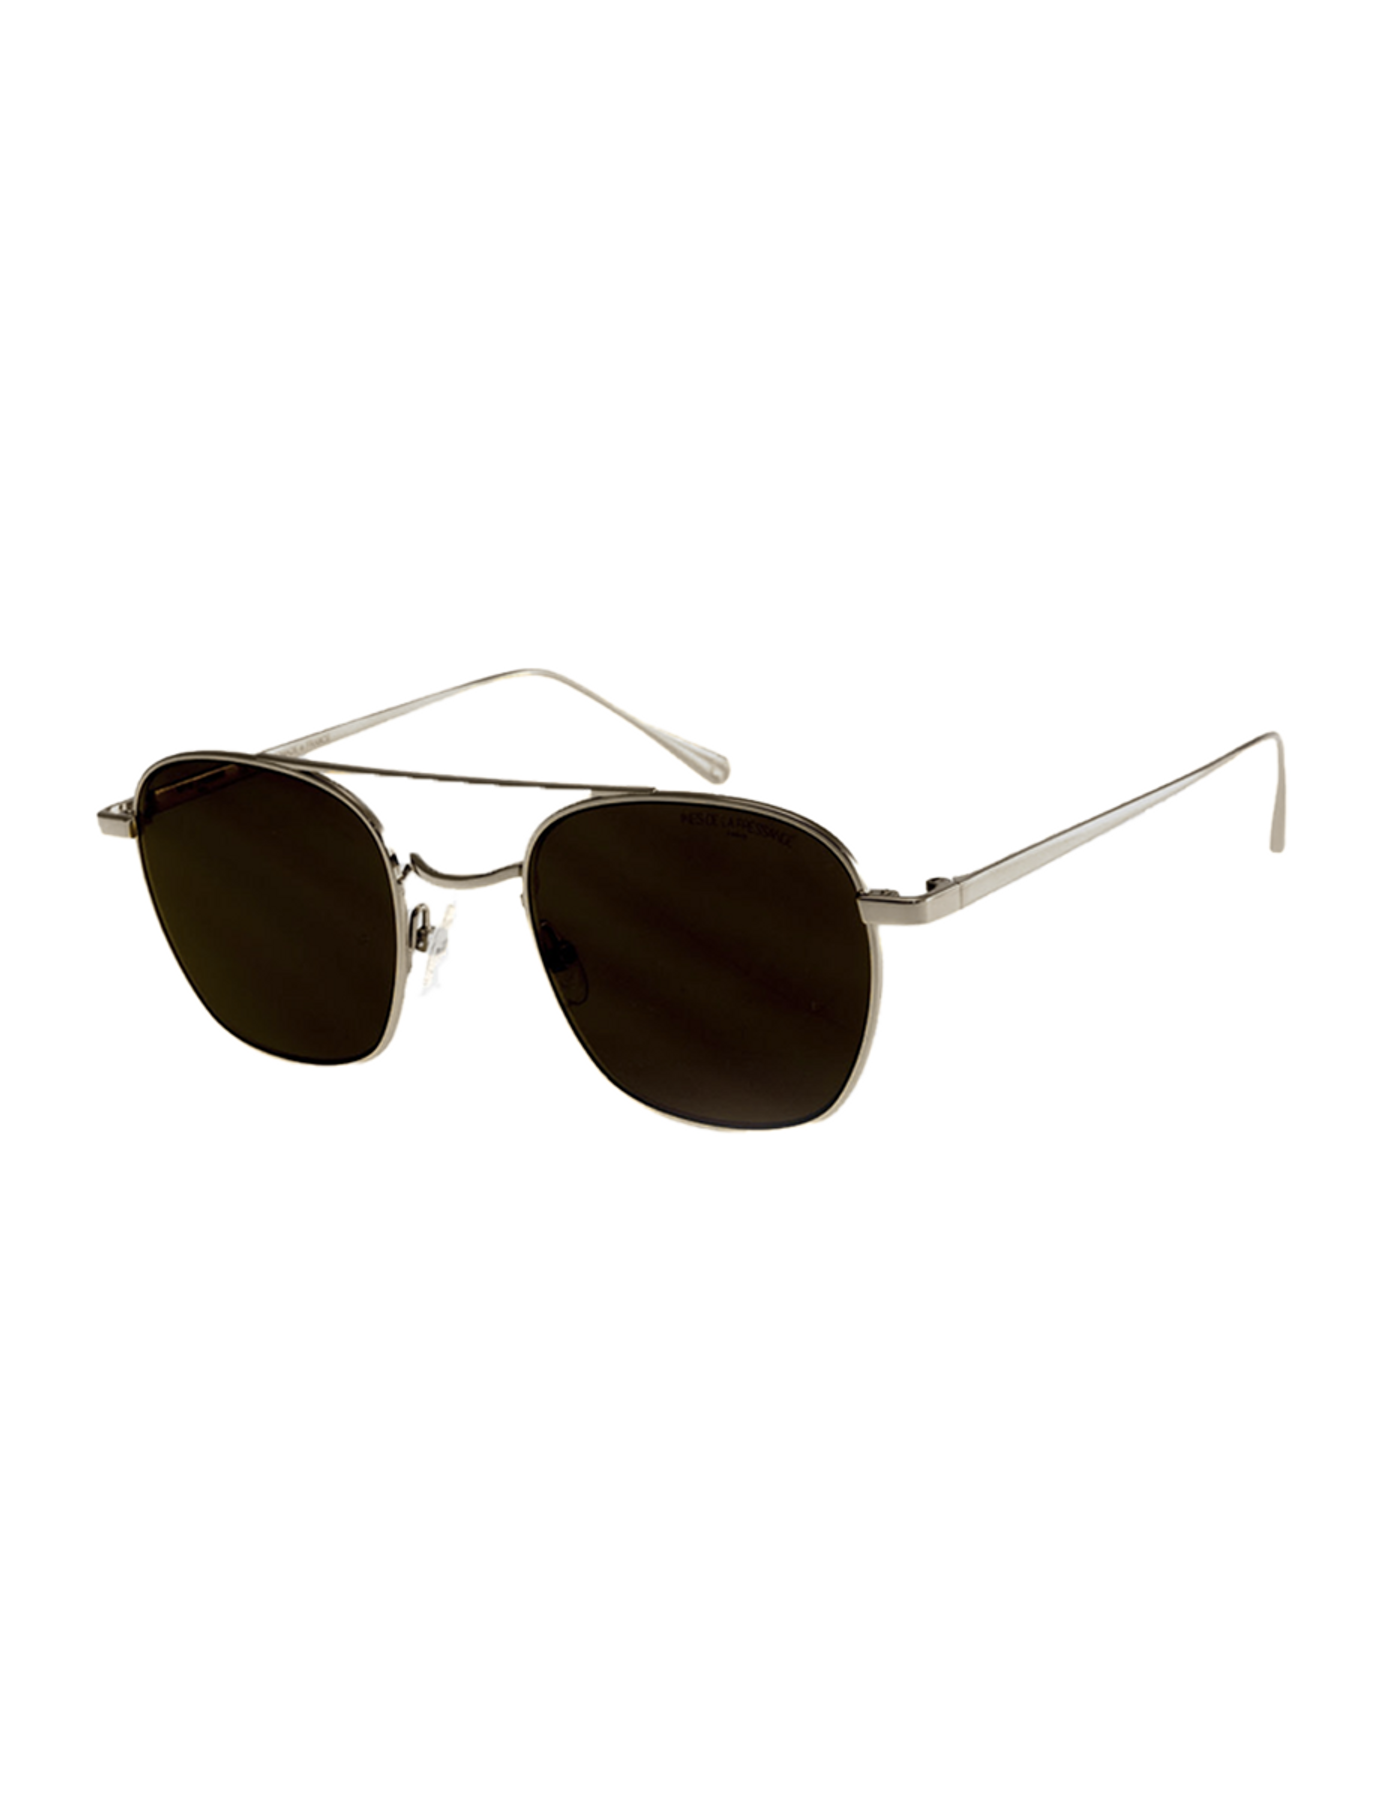 sunglasses-alice-metal